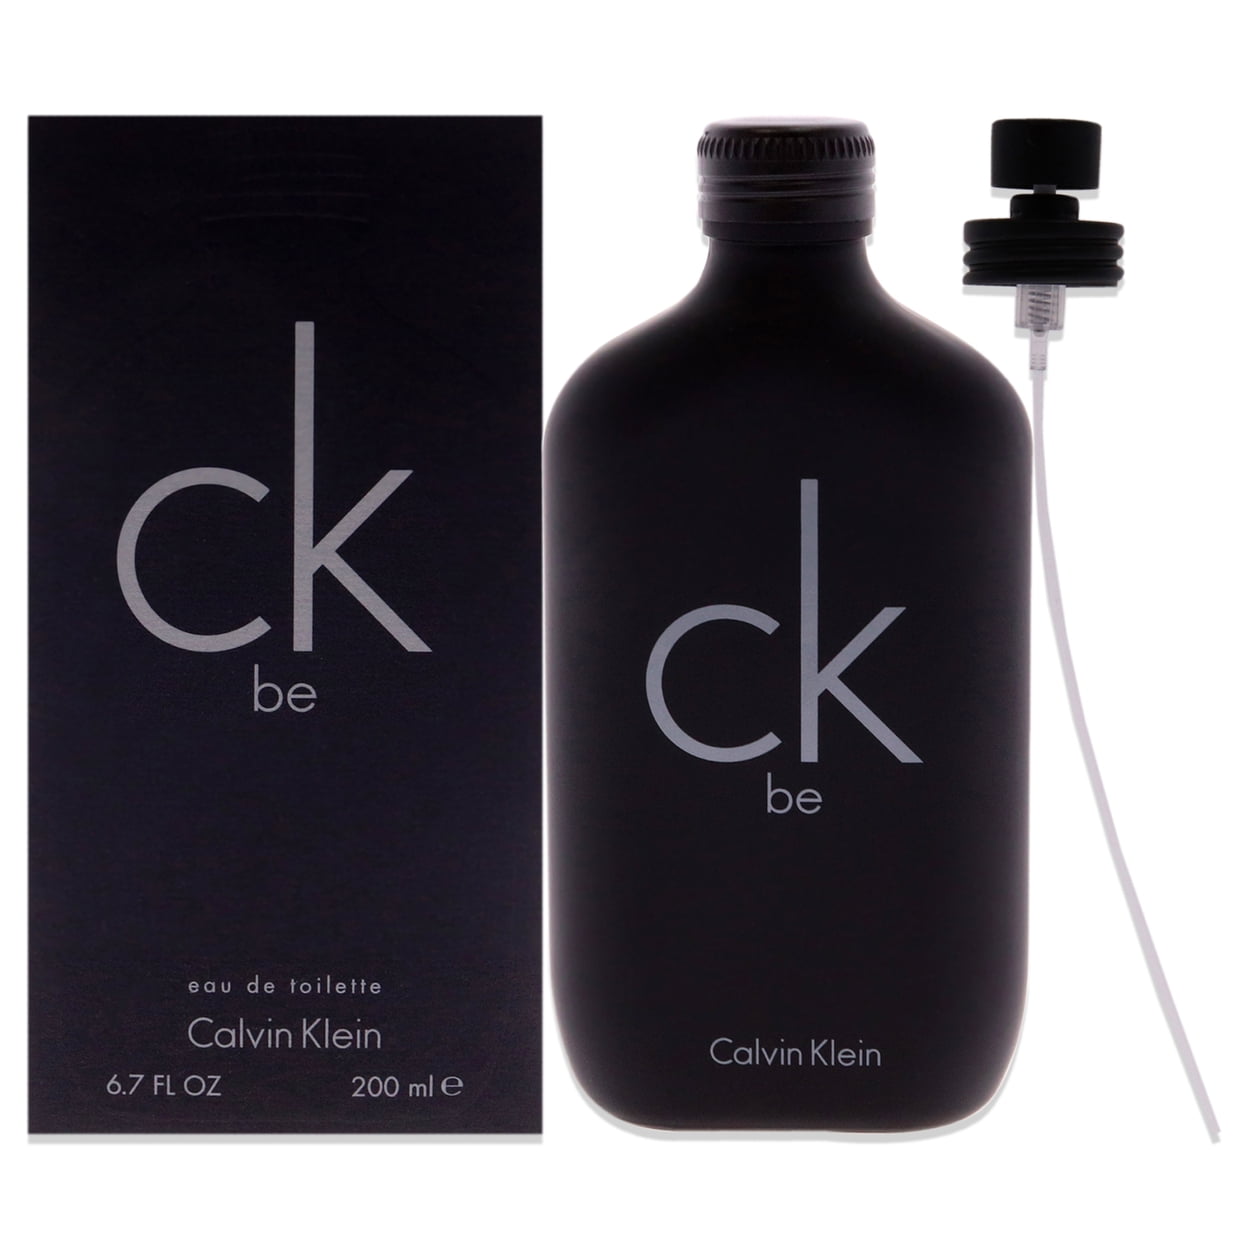 Calvin Klein CK Be Eau De Toilette Spray, Cologne for Men, 6.7 oz